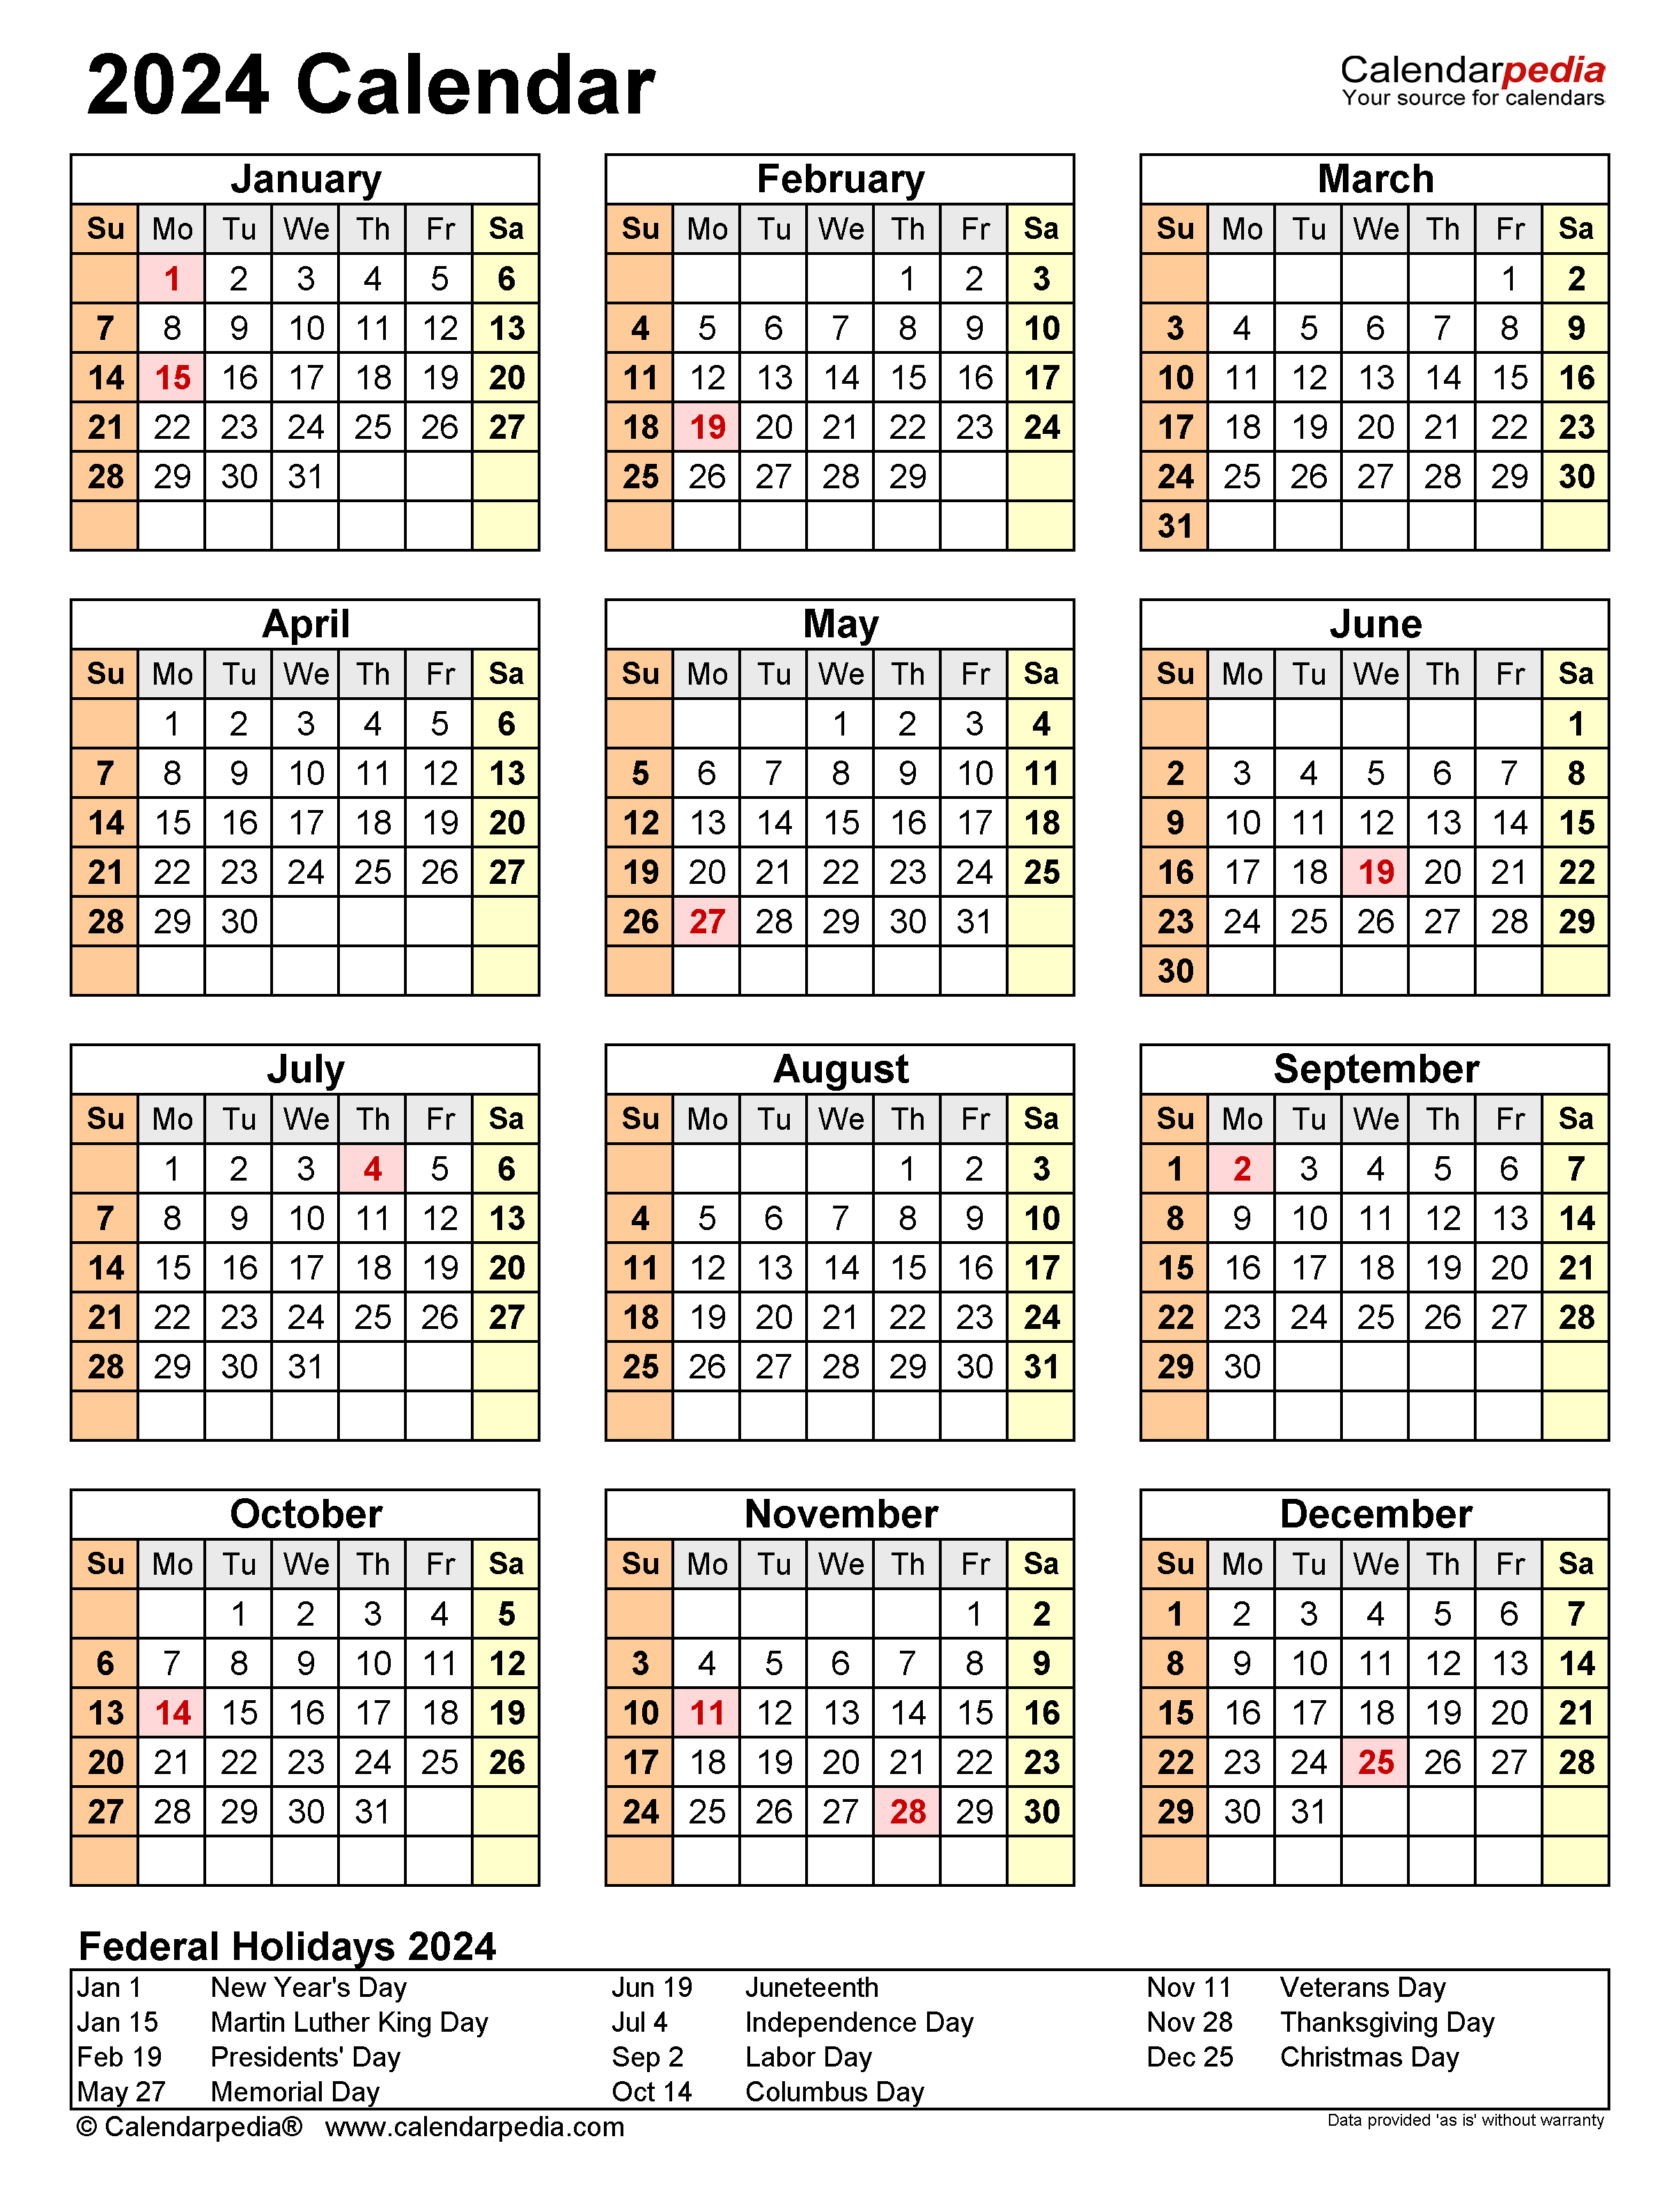 Free Printable 2024 Calendar With Holidays Crownflourmills - Free Printable 2024 Calendar Vector With Holidays